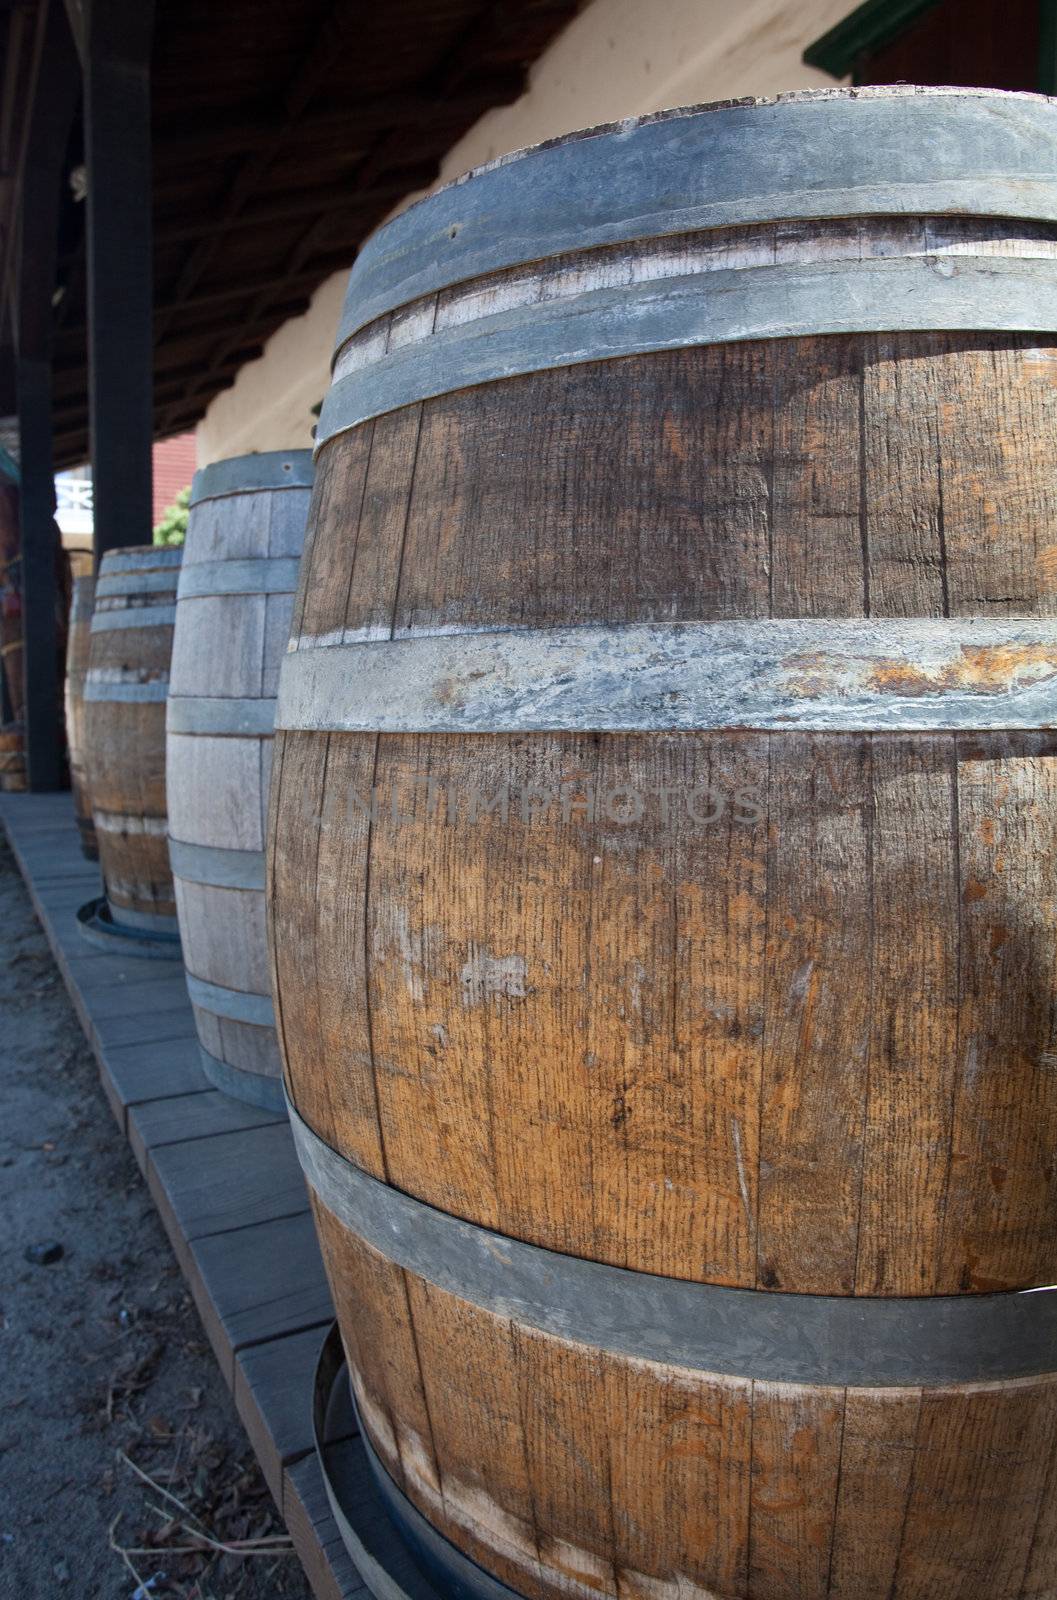 Barrels by old saloon in San Diego by steheap